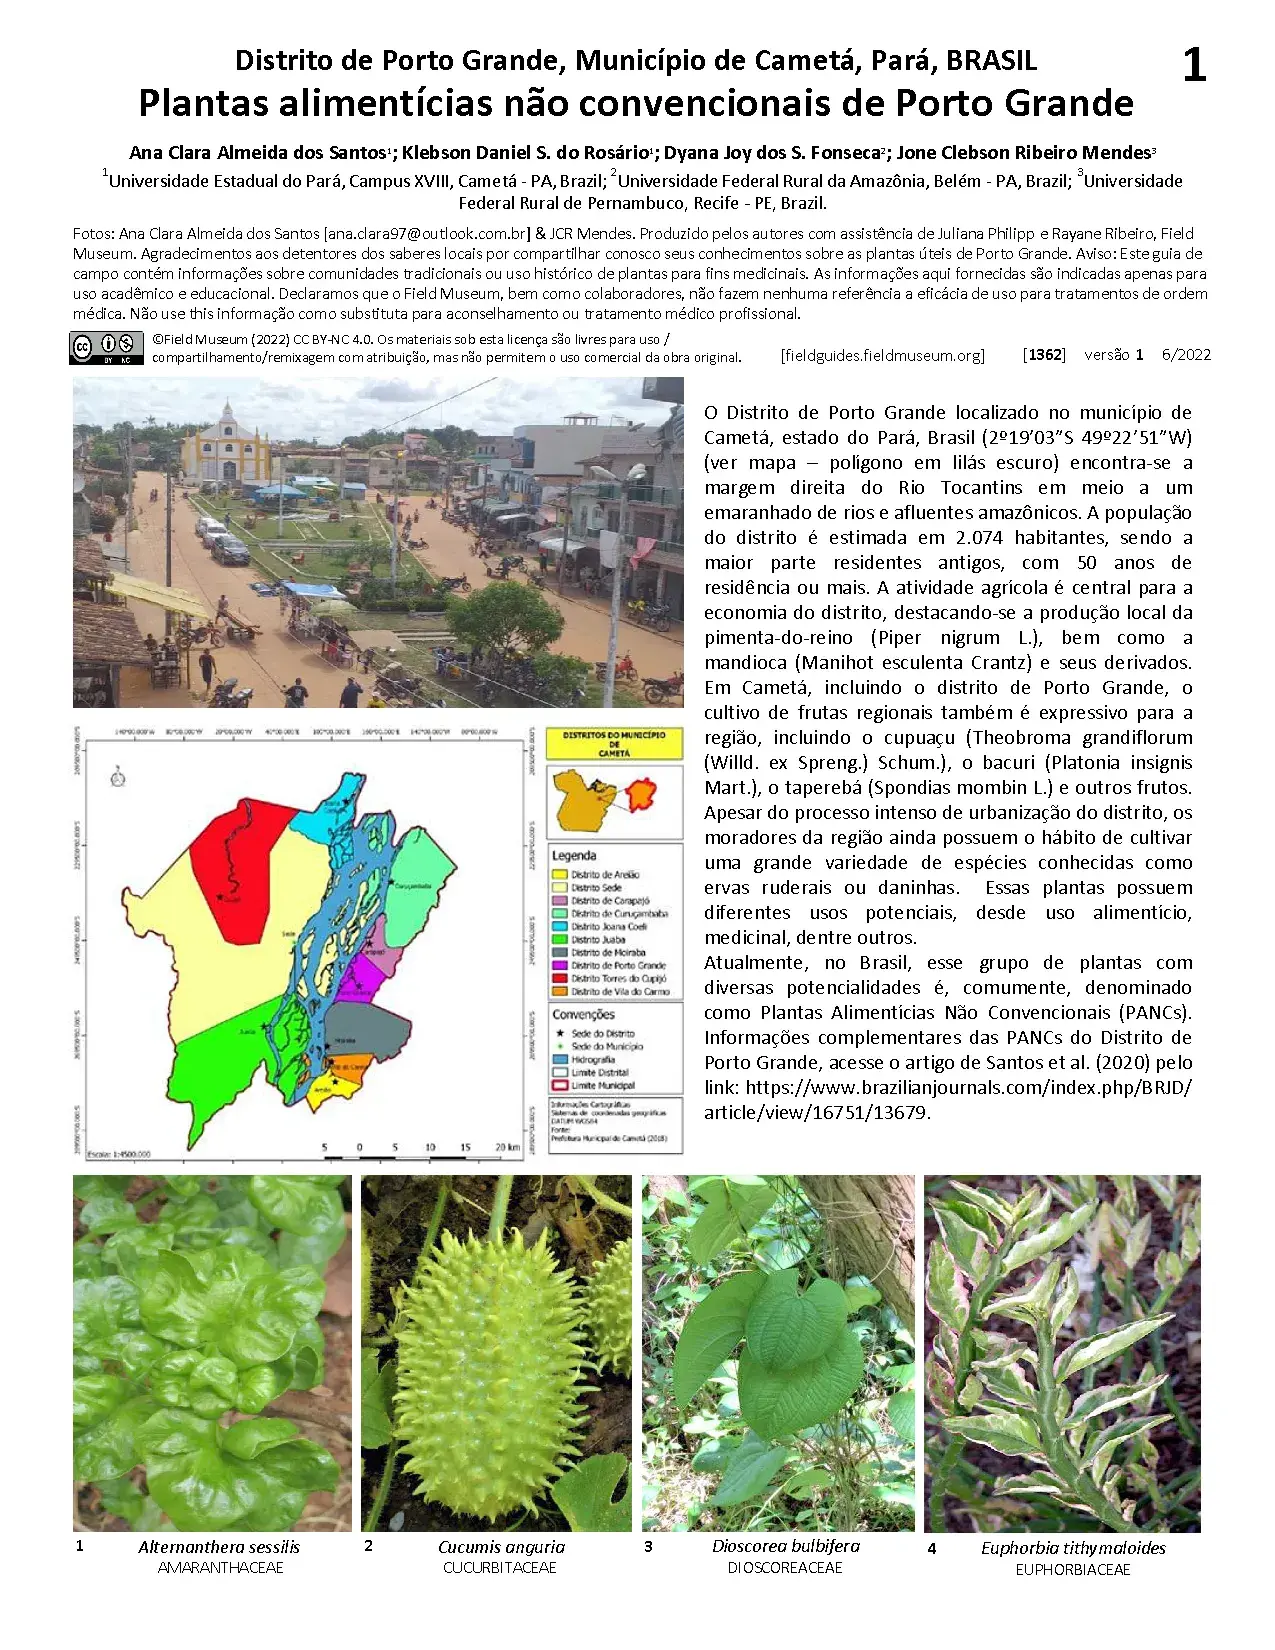 1362_brazil_edible_plants_of_porto_grande.pdf 